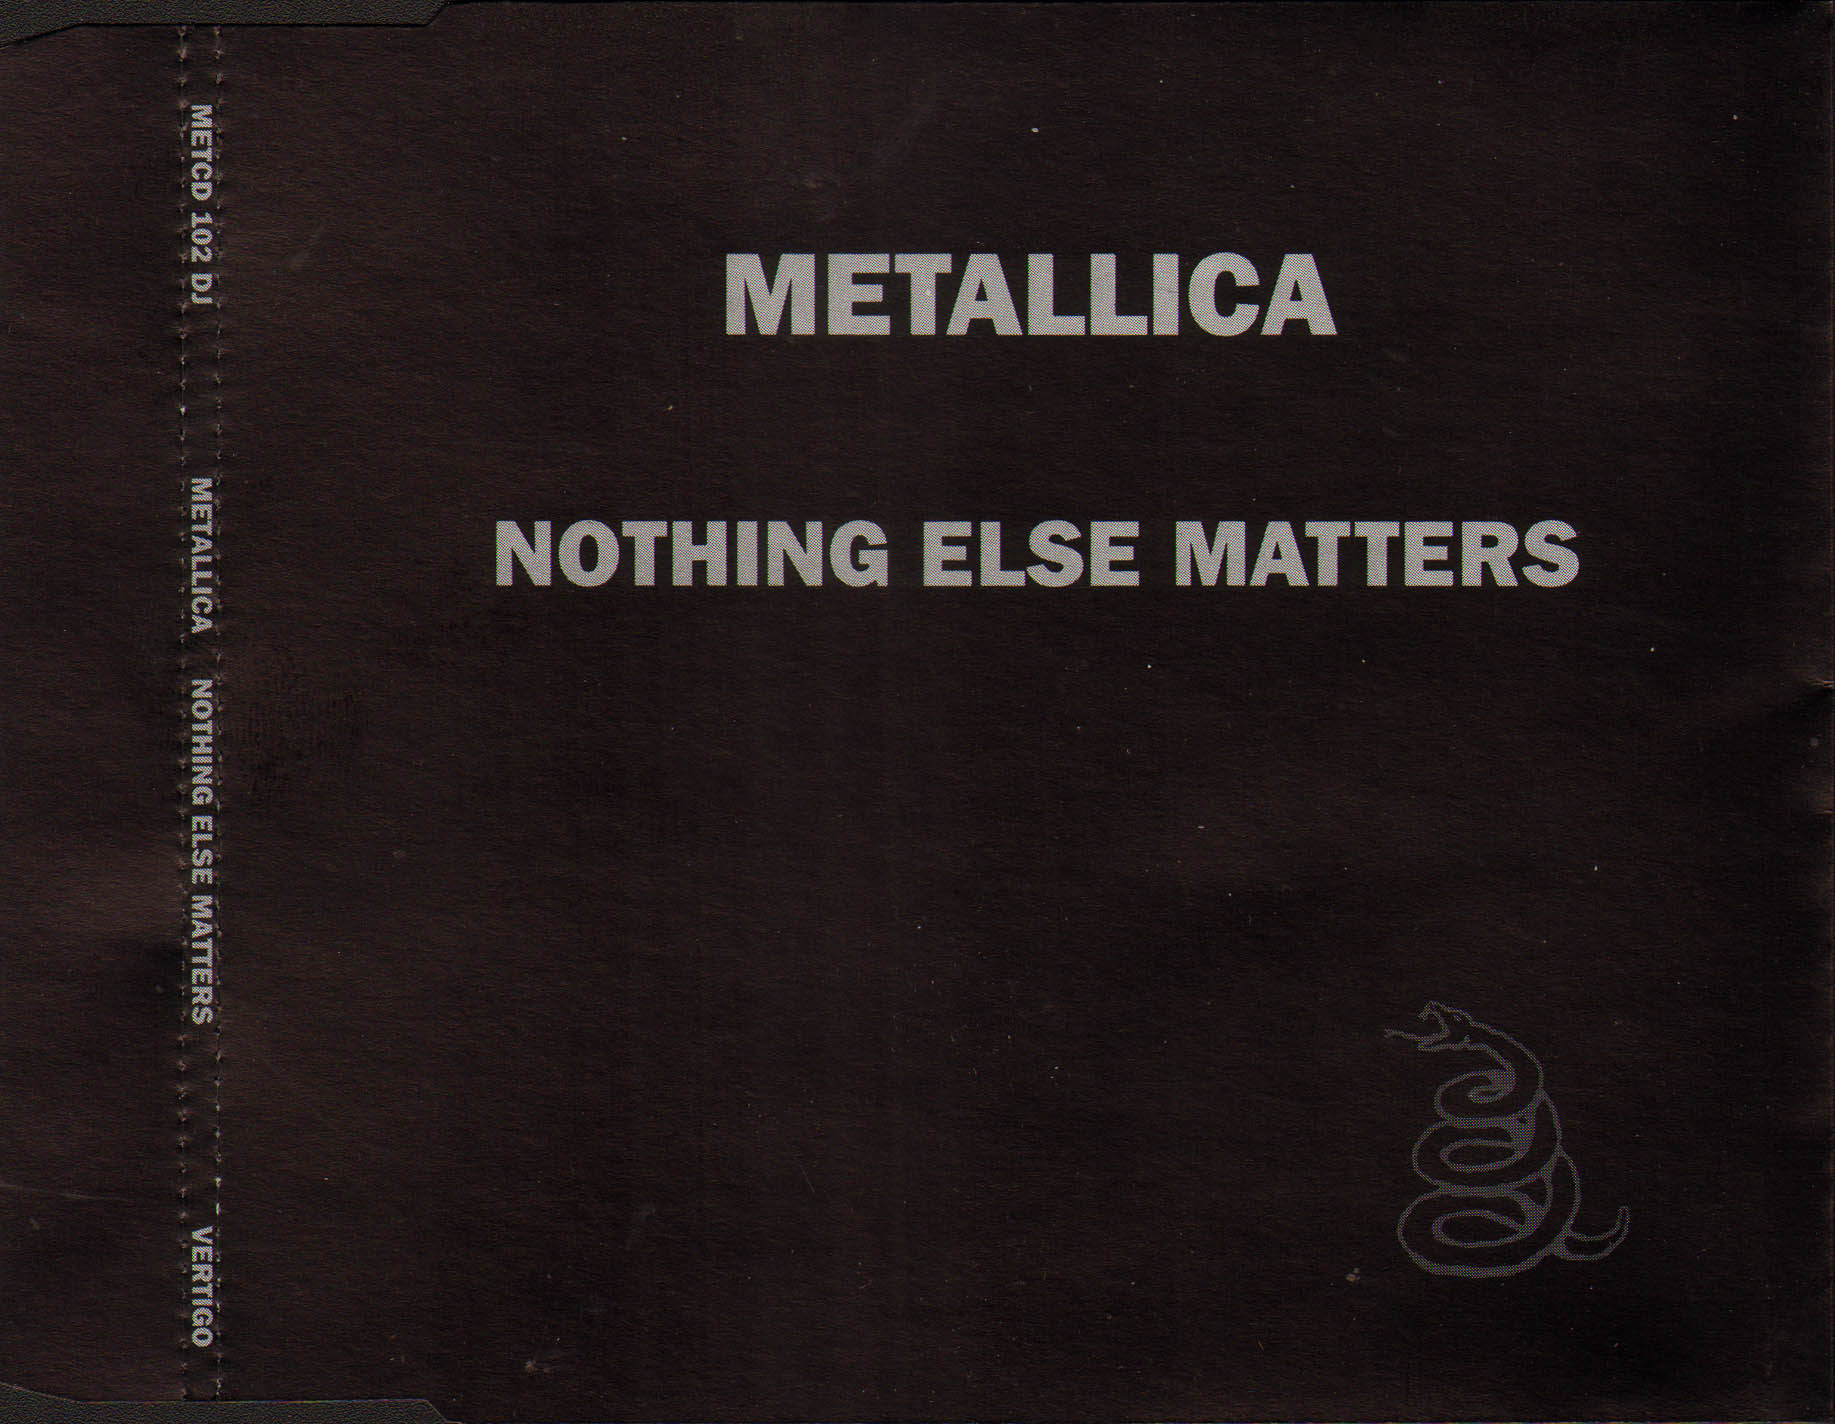 Metallica Nothing Else Matters Quotes. QuotesGram